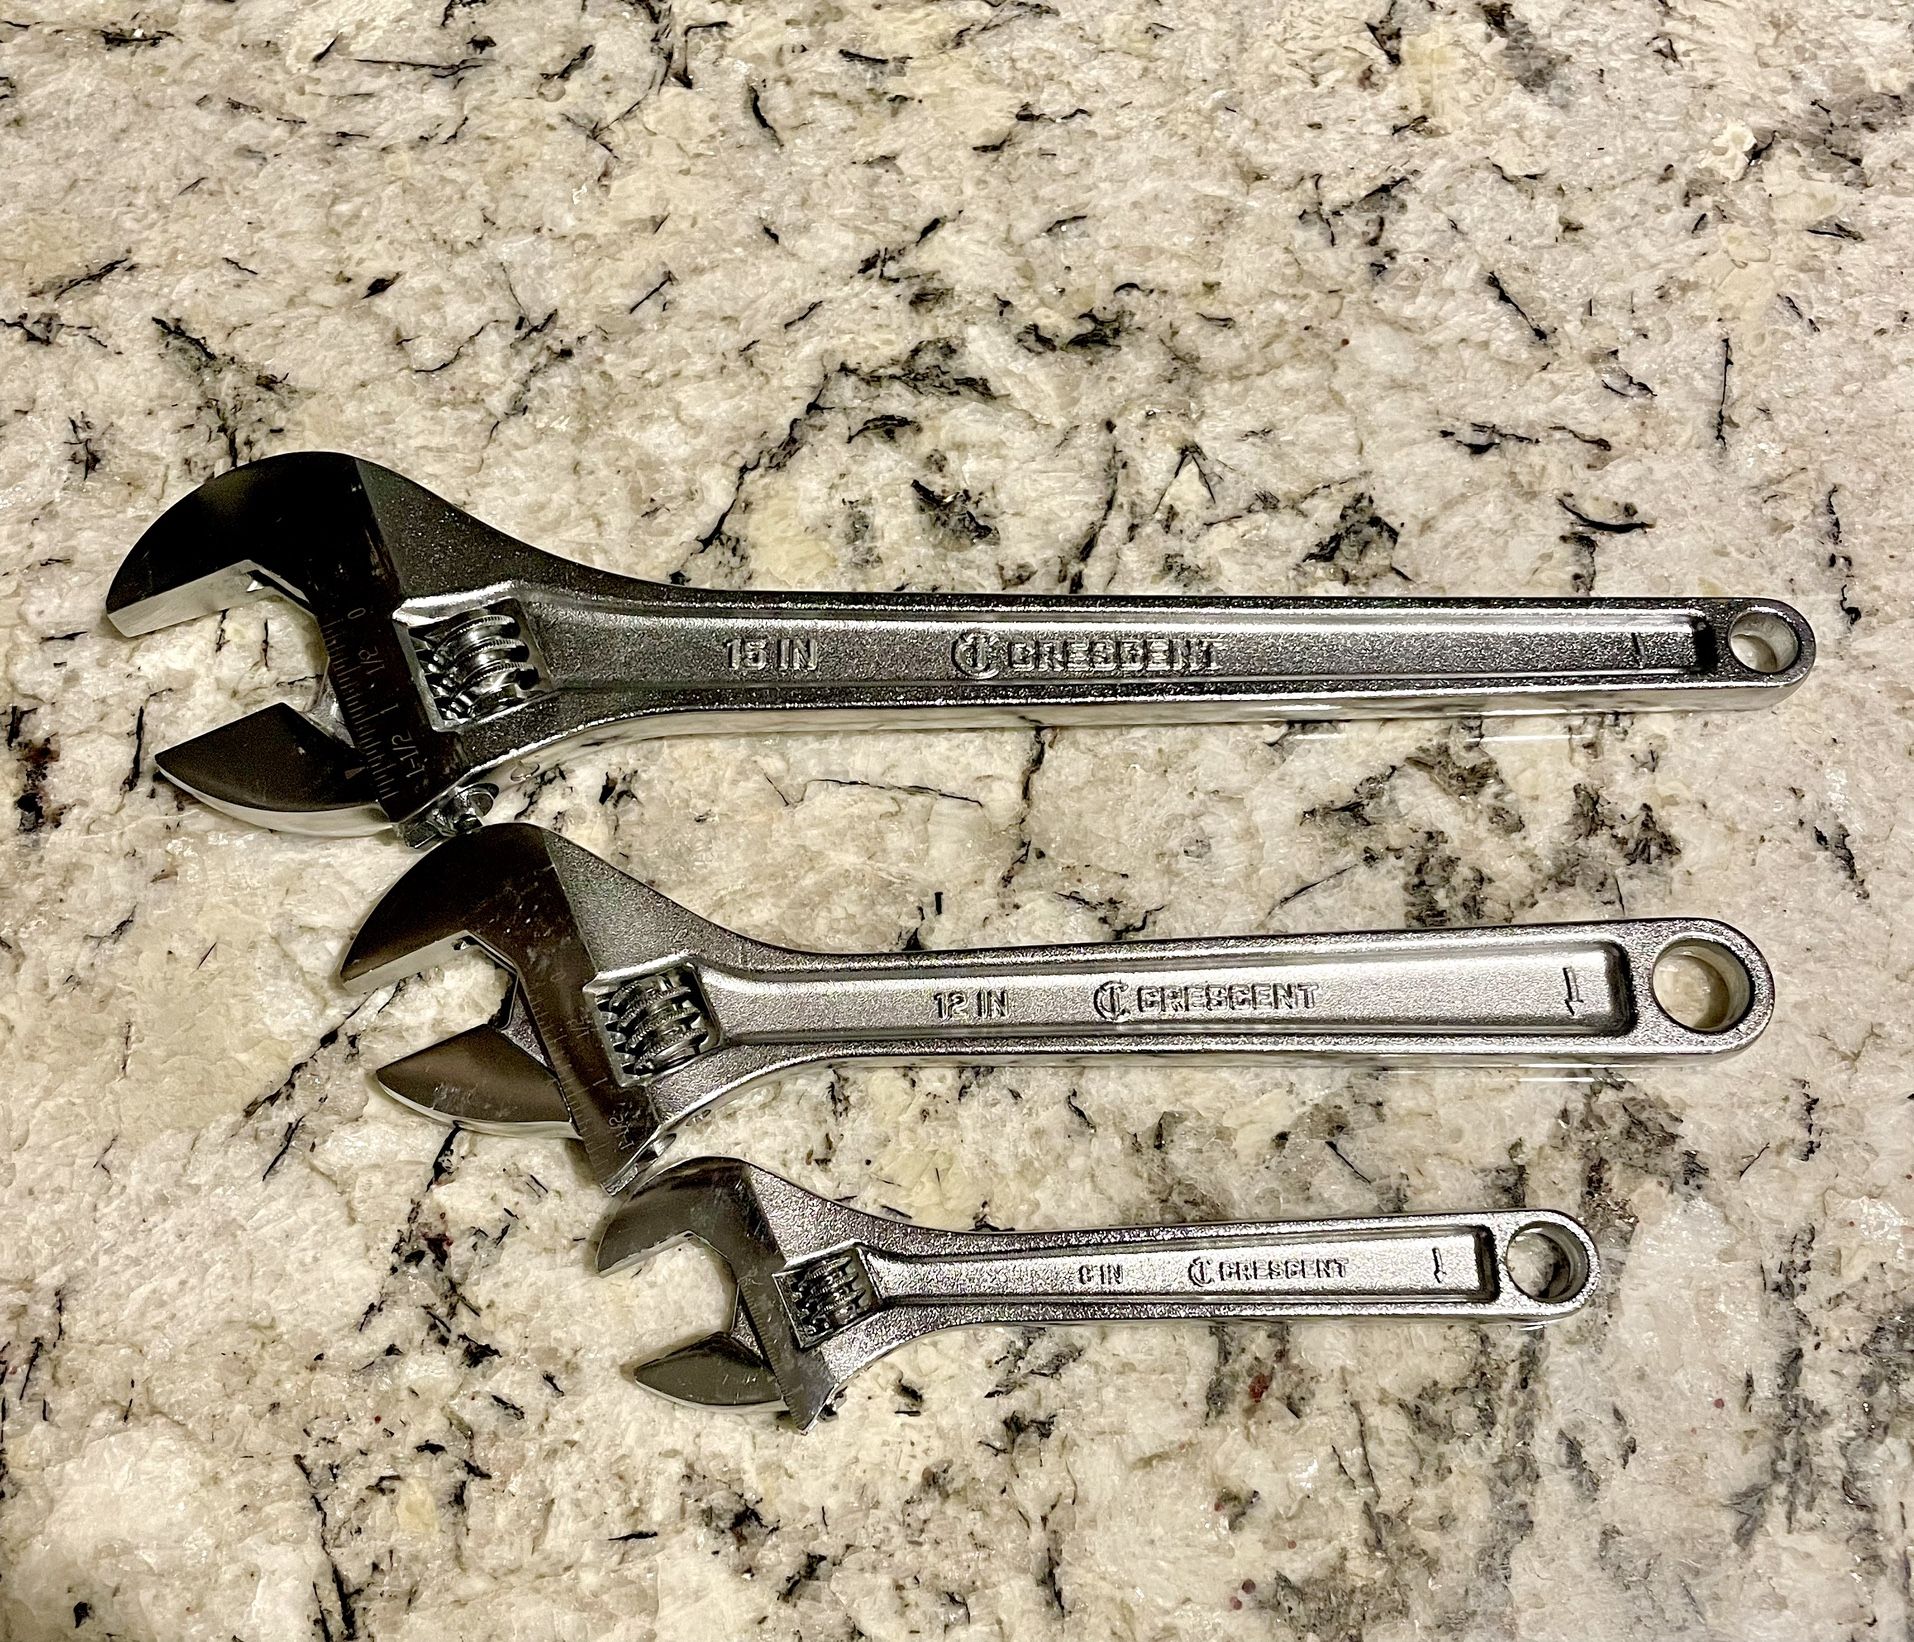 Husky Adjustable Wrench Set 